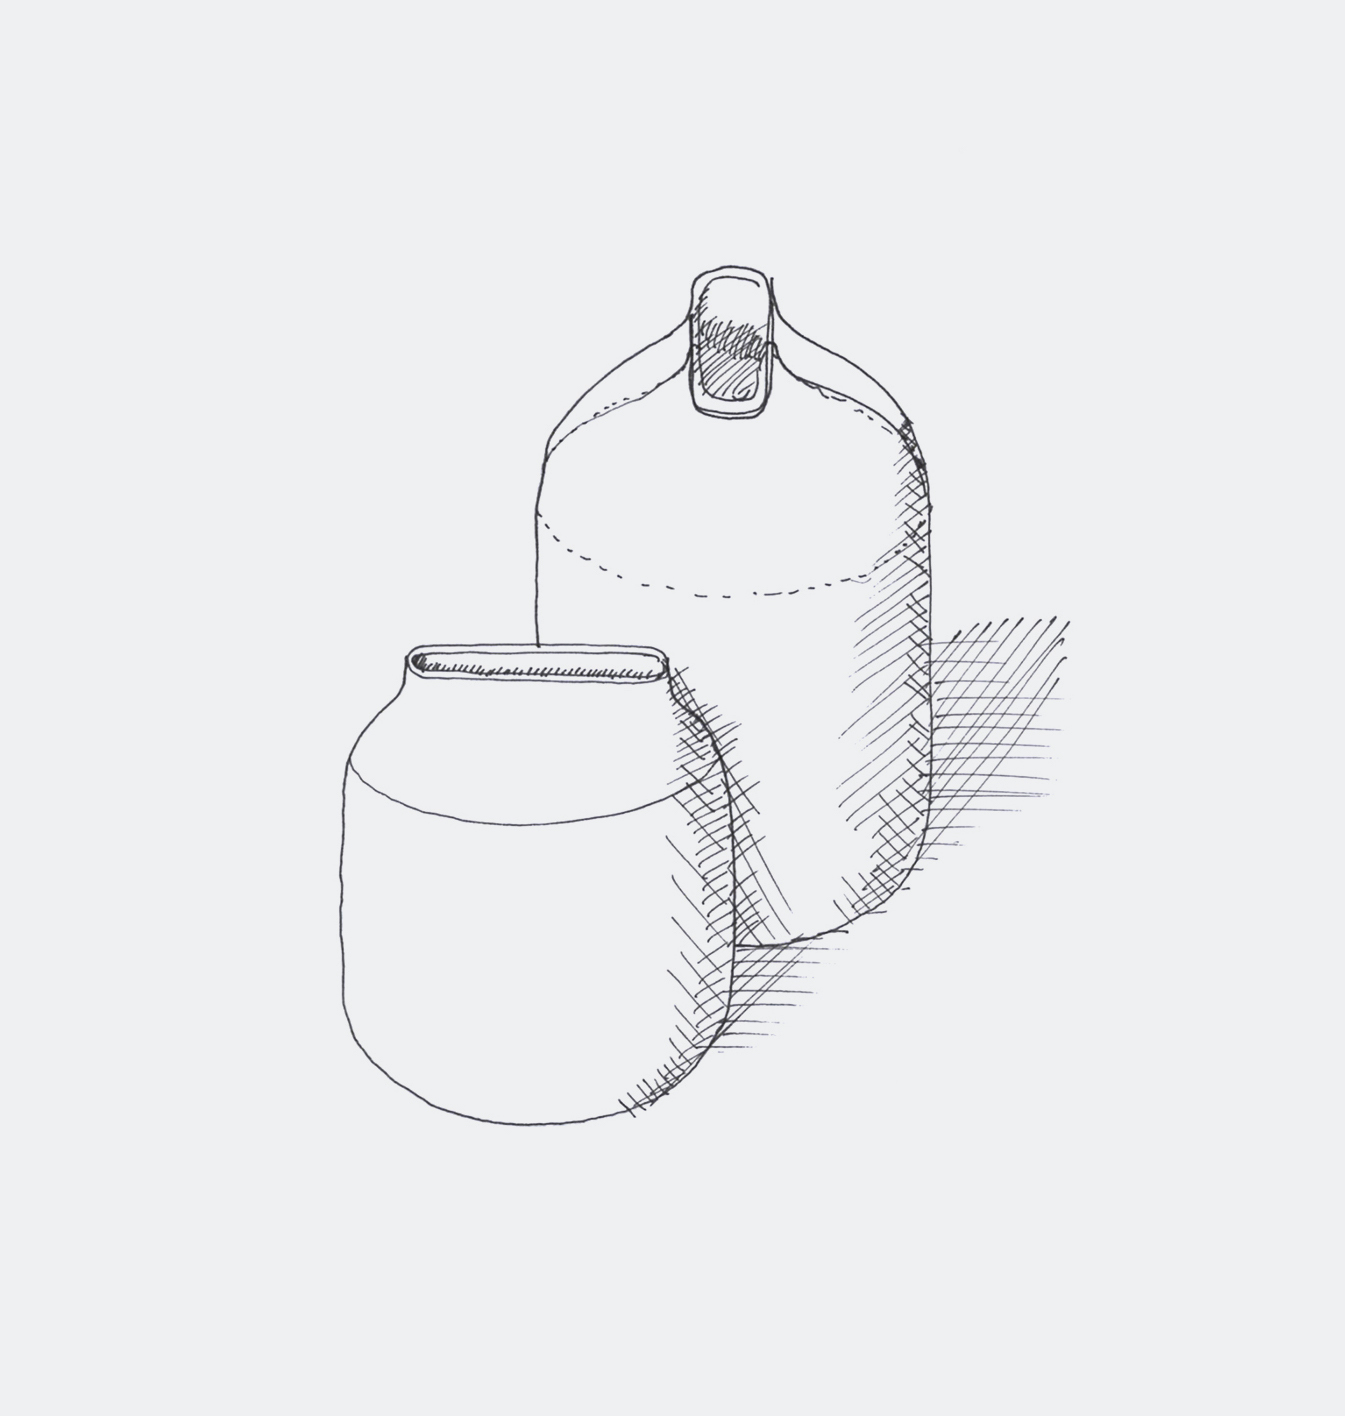 Sketch of Fila Vases by Debiasi Sandri for Ligne Roset